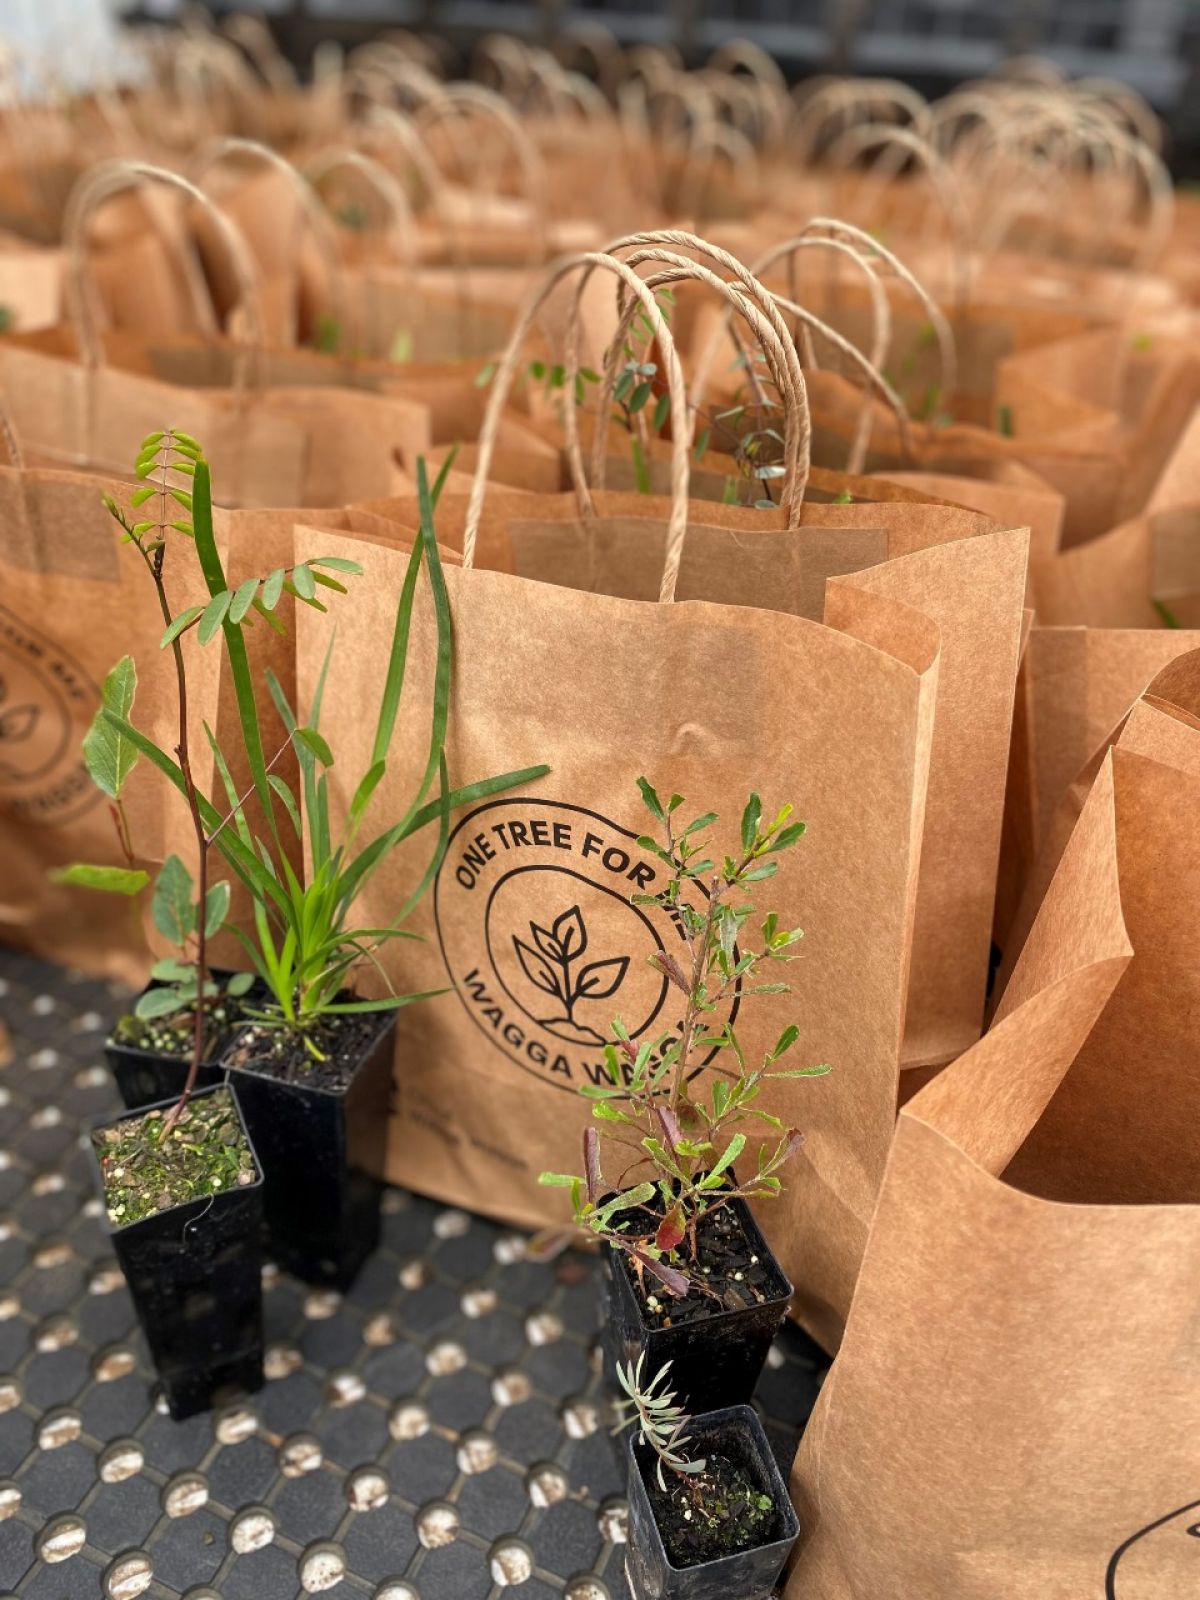 Seedlings in front of paper bags